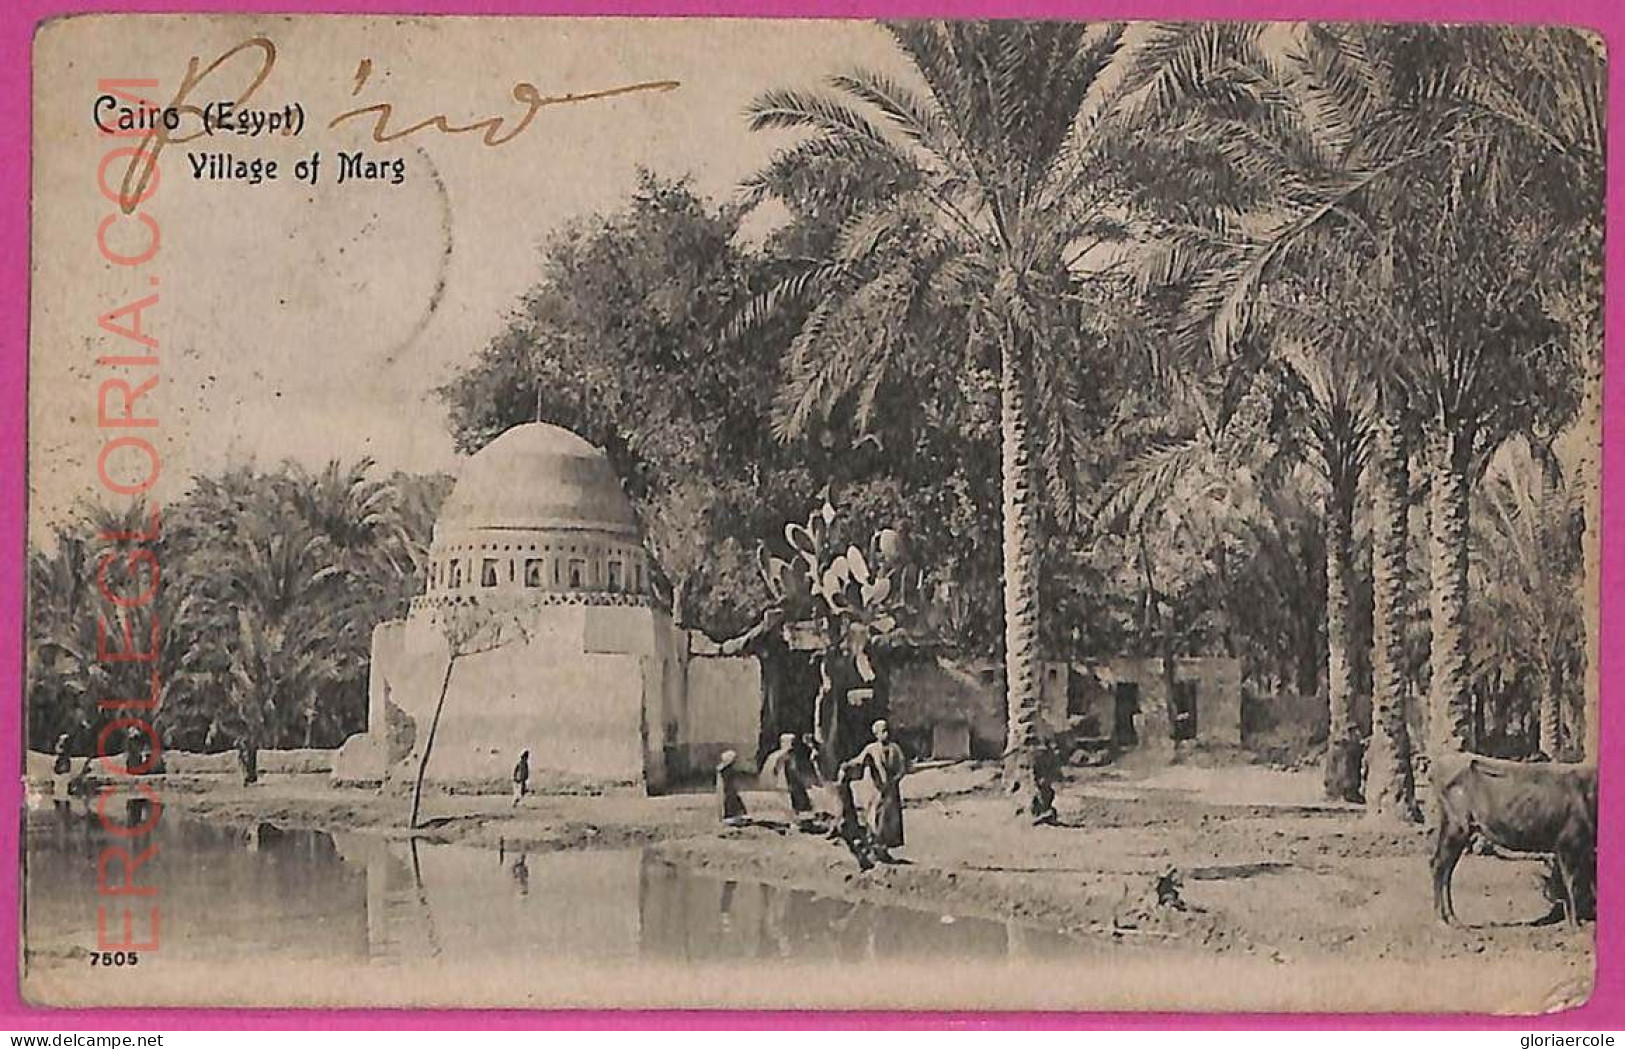 Ag3031 - EGYPT - VINTAGE POSTCARD - Cairo - 1905 - Cairo